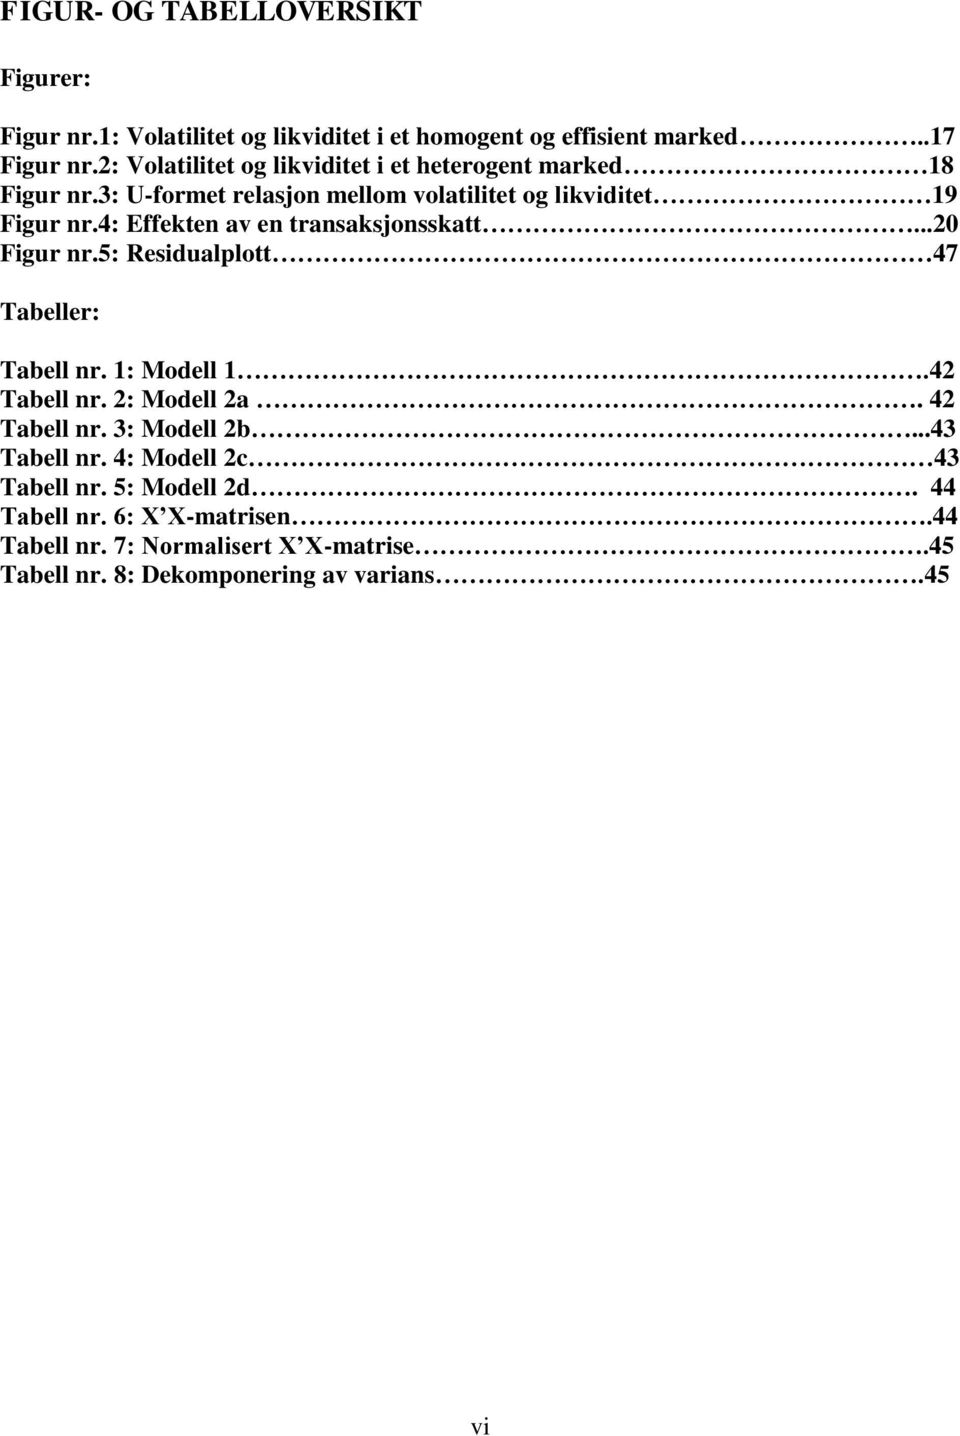 4: Effekten av en transaksjonsskatt...20 Figur nr.5: Residualplott 47 Tabeller: Tabell nr. 1: Modell 1.42 Tabell nr. 2: Modell 2a. 42 Tabell nr.